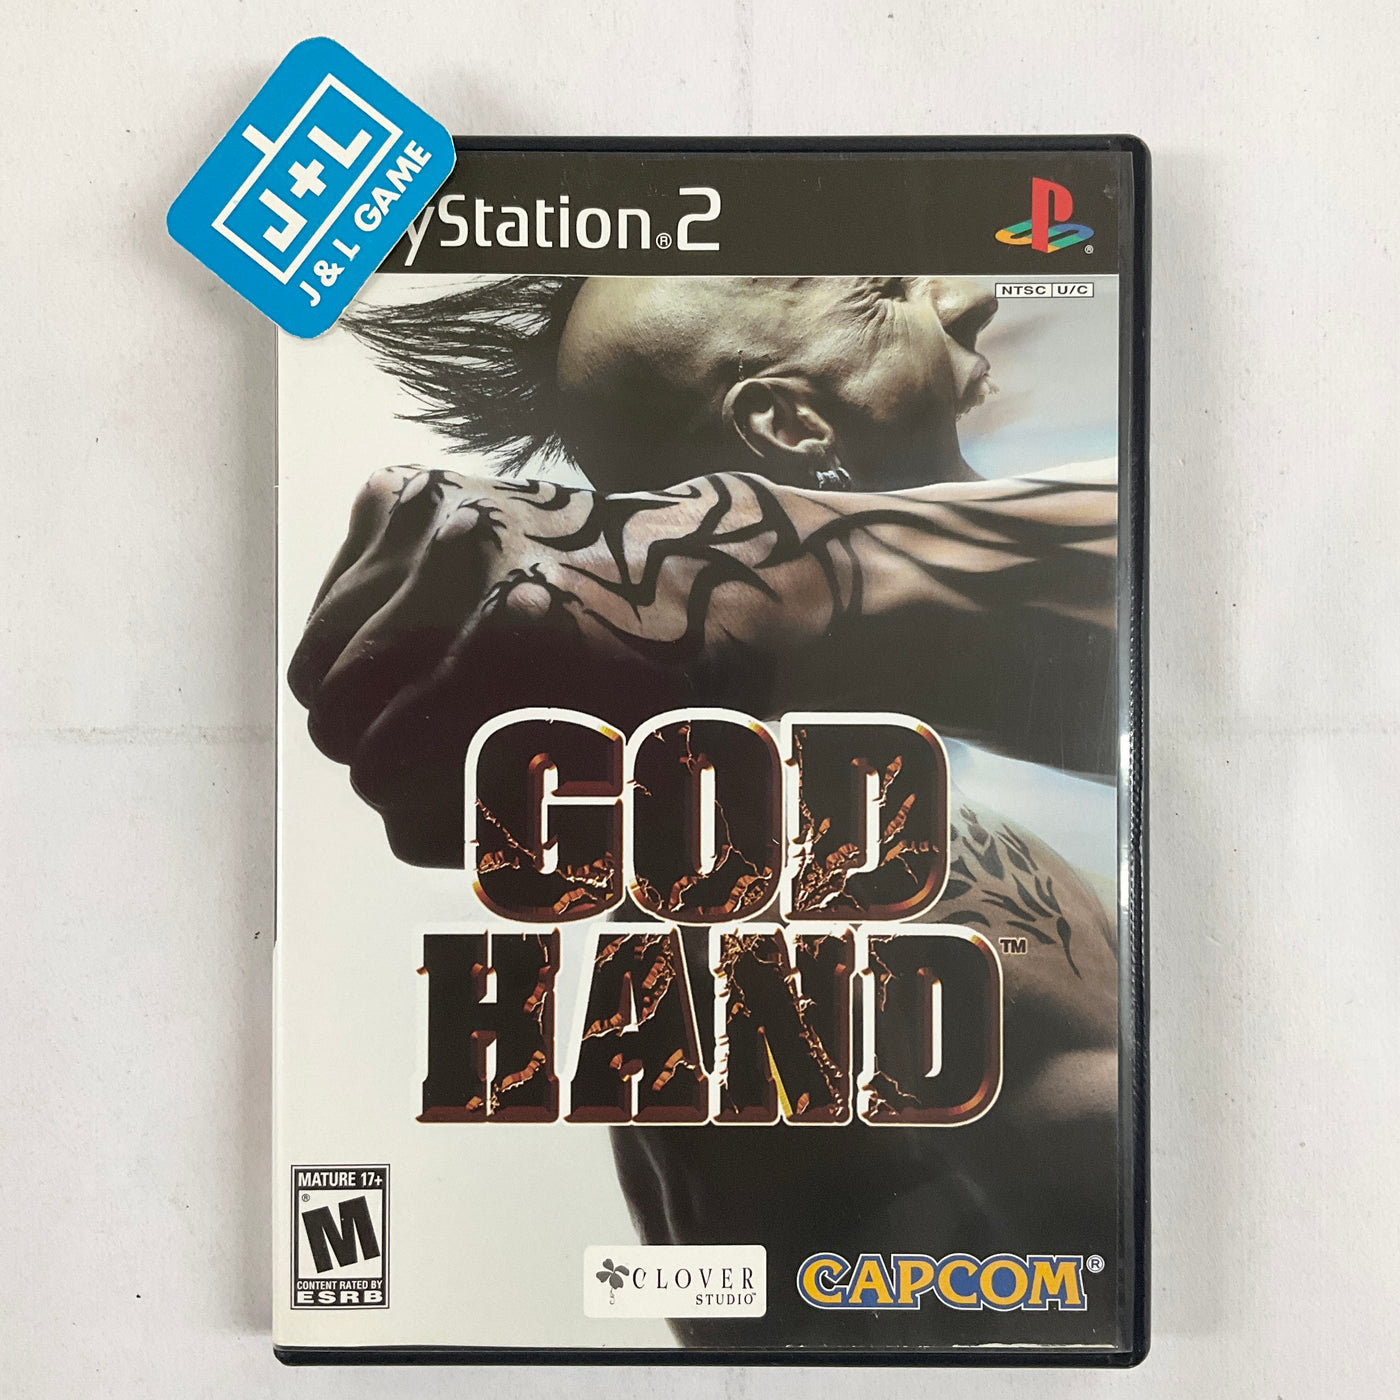 God Hand - PlayStation 2